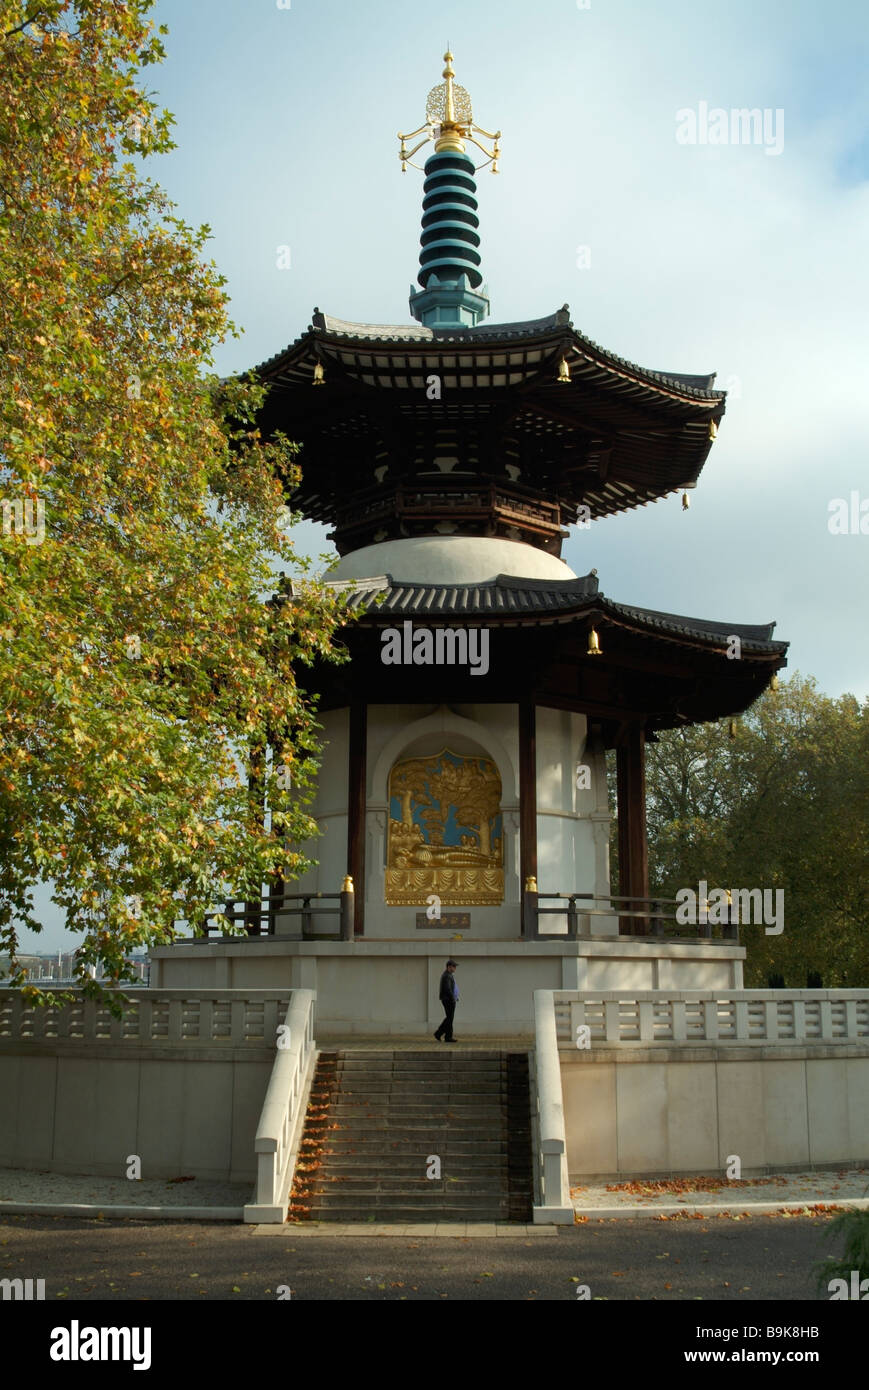 La Pagoda de la paz, Battersea Park, Londres, Inglaterra, Reino Unido. Foto de stock